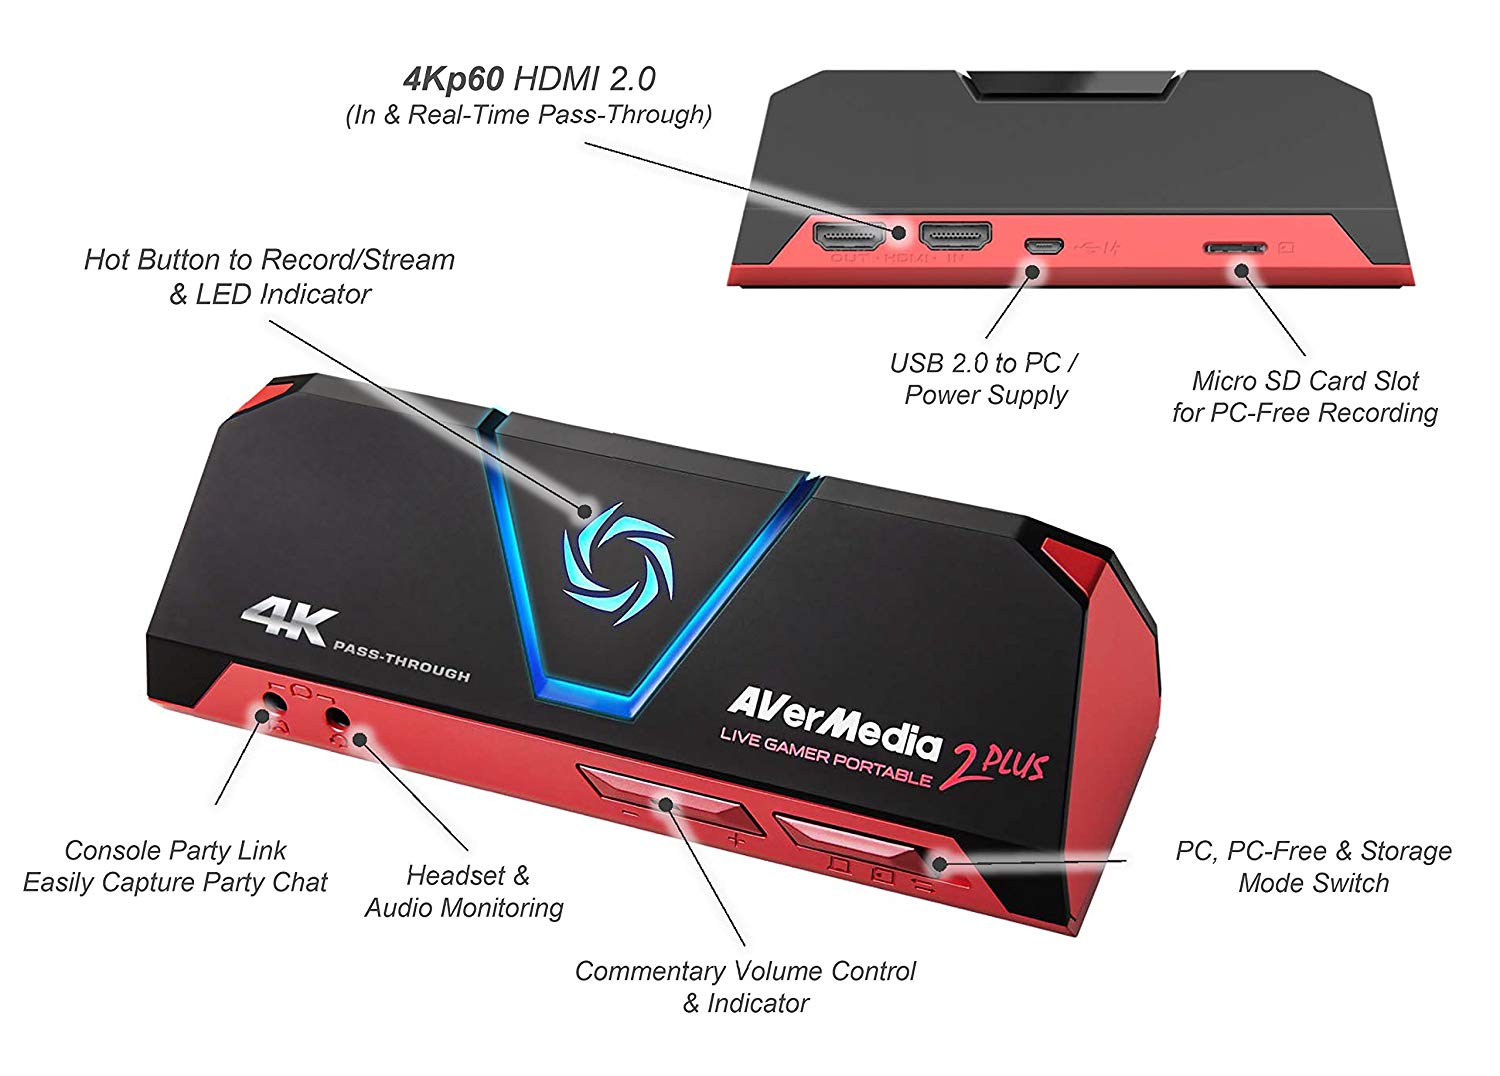 AVerMedia Live Gamer Portable 2 Plus, 4K Pass-Through, 4K Full HD